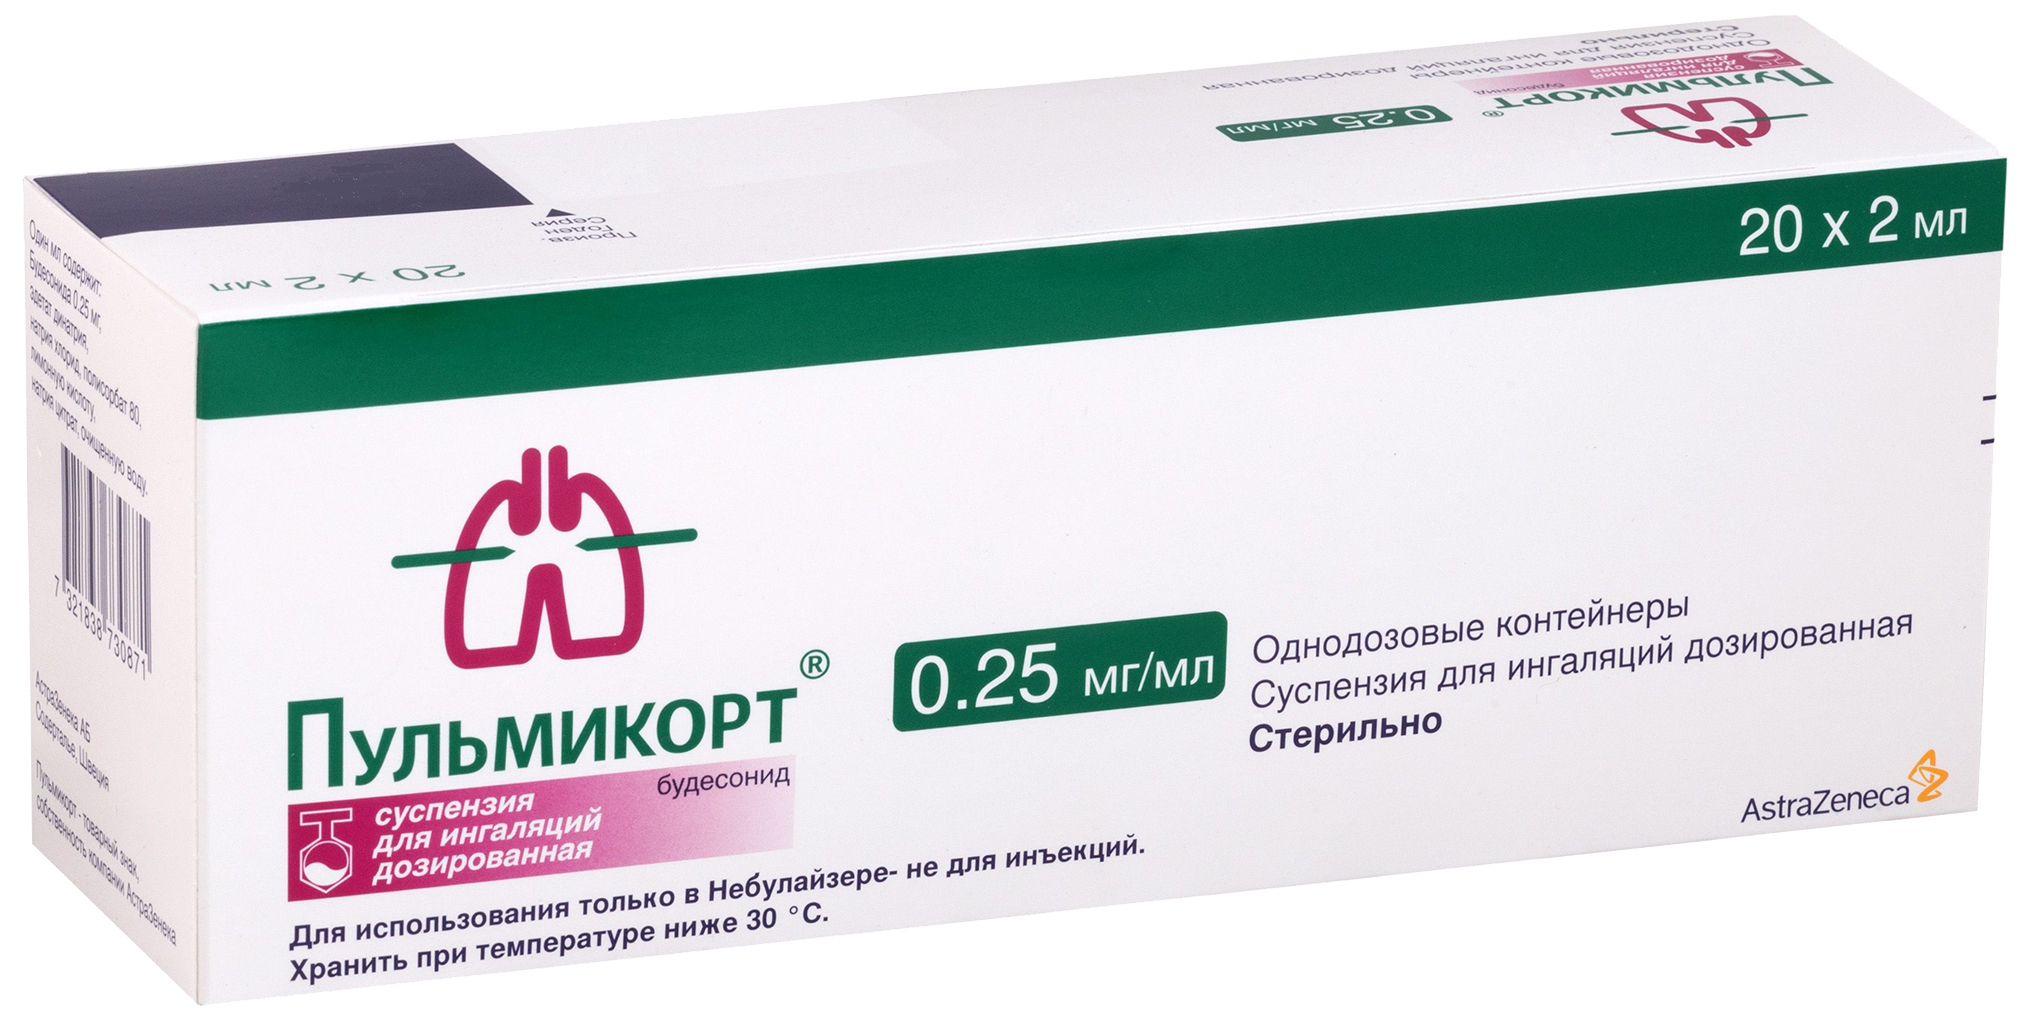 Пульмикорт сусп. для инг.доз.0, 25 мг/мл контейнер 2 мл №20, AstraZeneca AB  - купить со скидкой